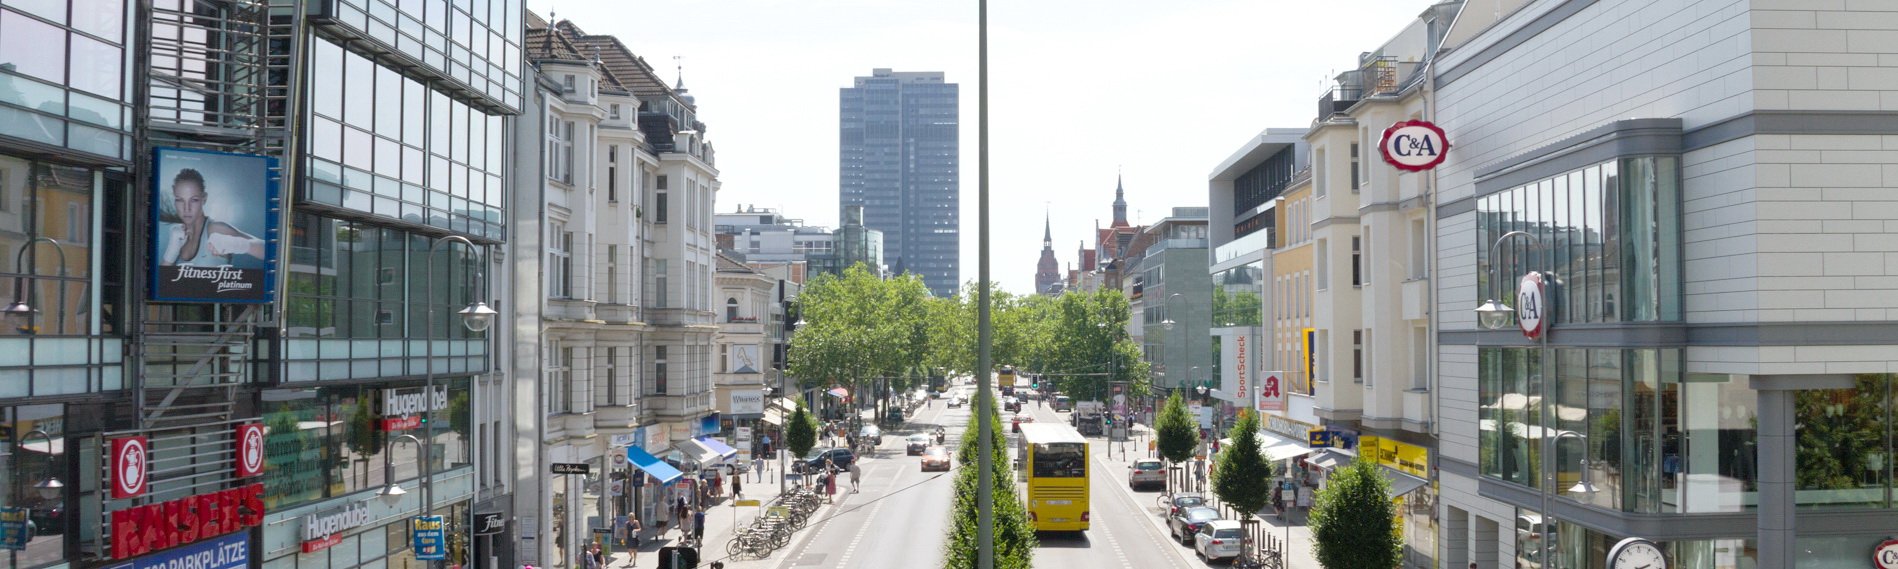 Berlim em detalhe – Berlim-Steglitz num relance